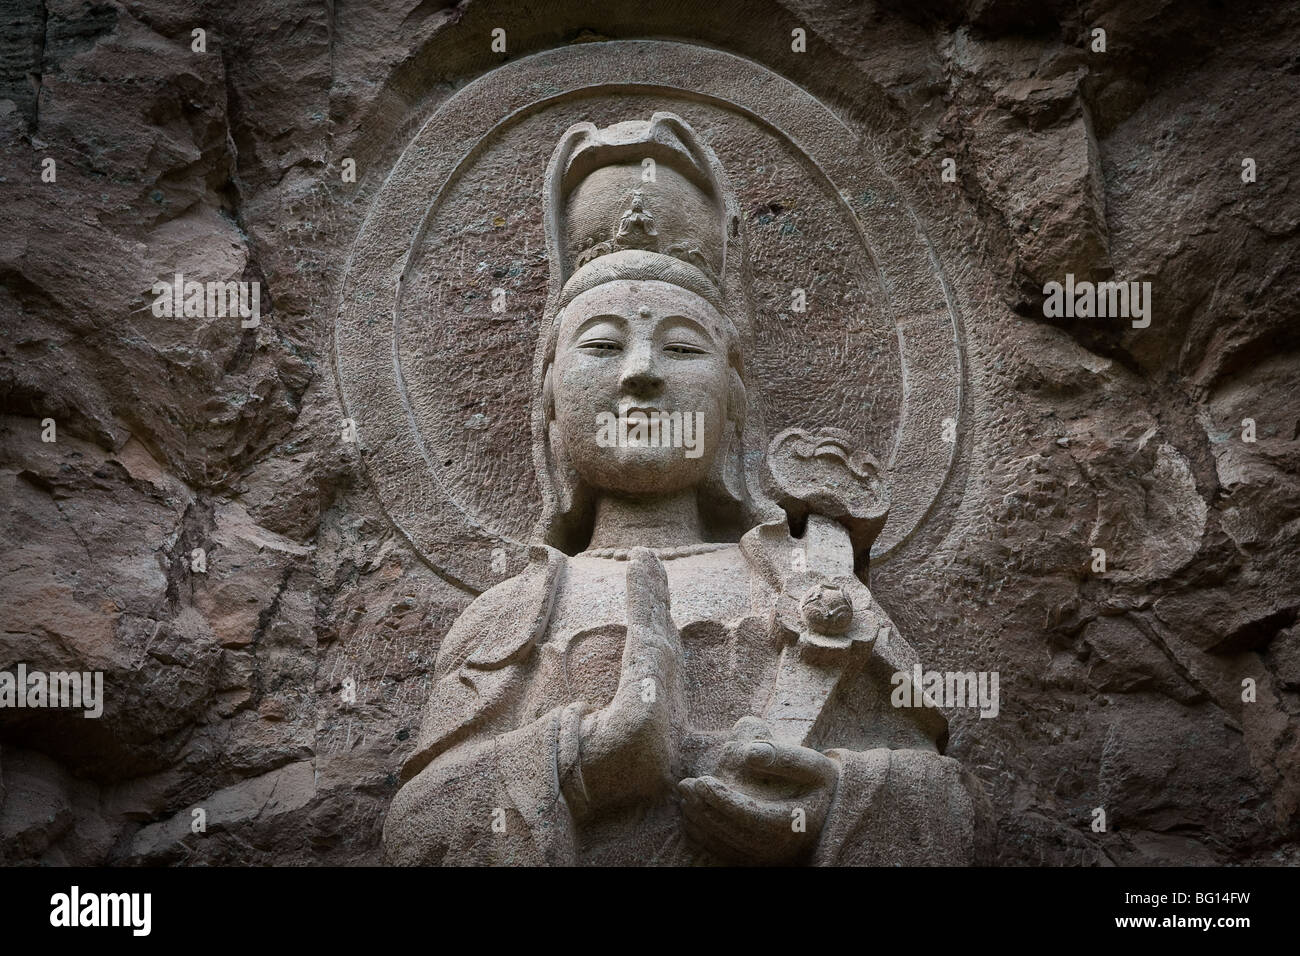 Statue of Guanyin (觀音) the Buddhist Goddess of Mercy Stock Photo - Alamy